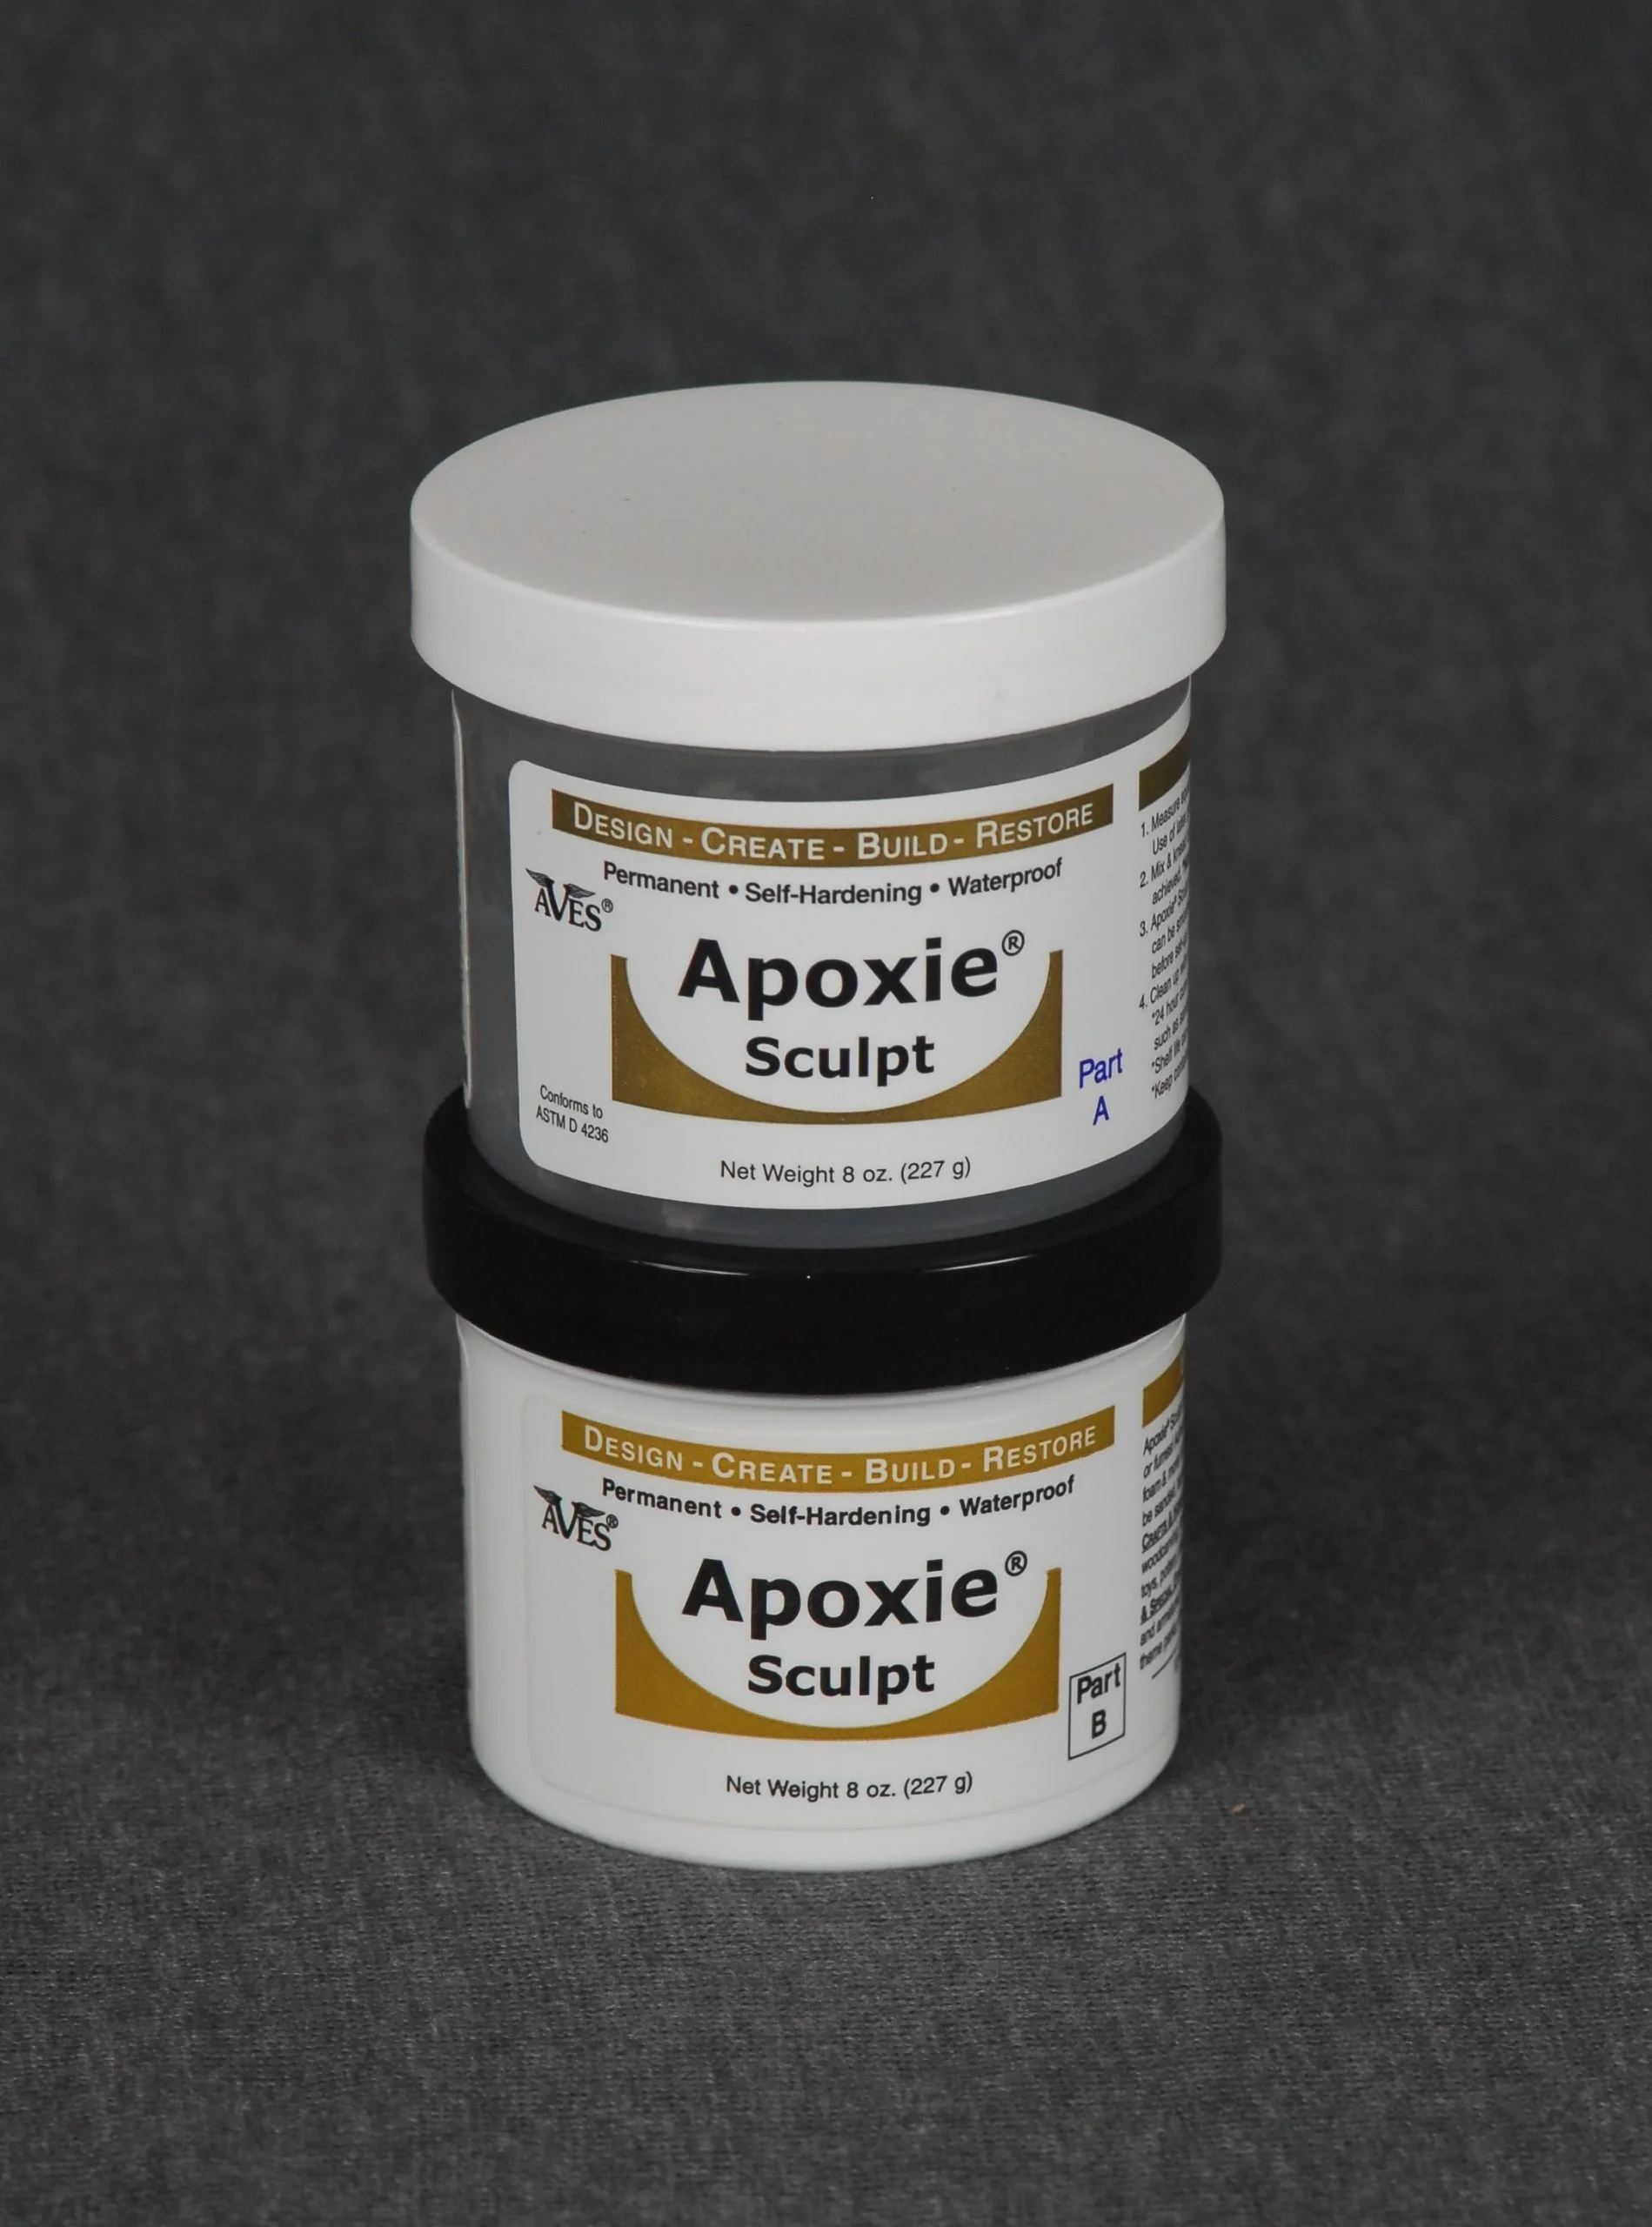 Aves Apoxie Sculpt - 2 Part Modeling Compound (A & B) - 1 Pound, Brown